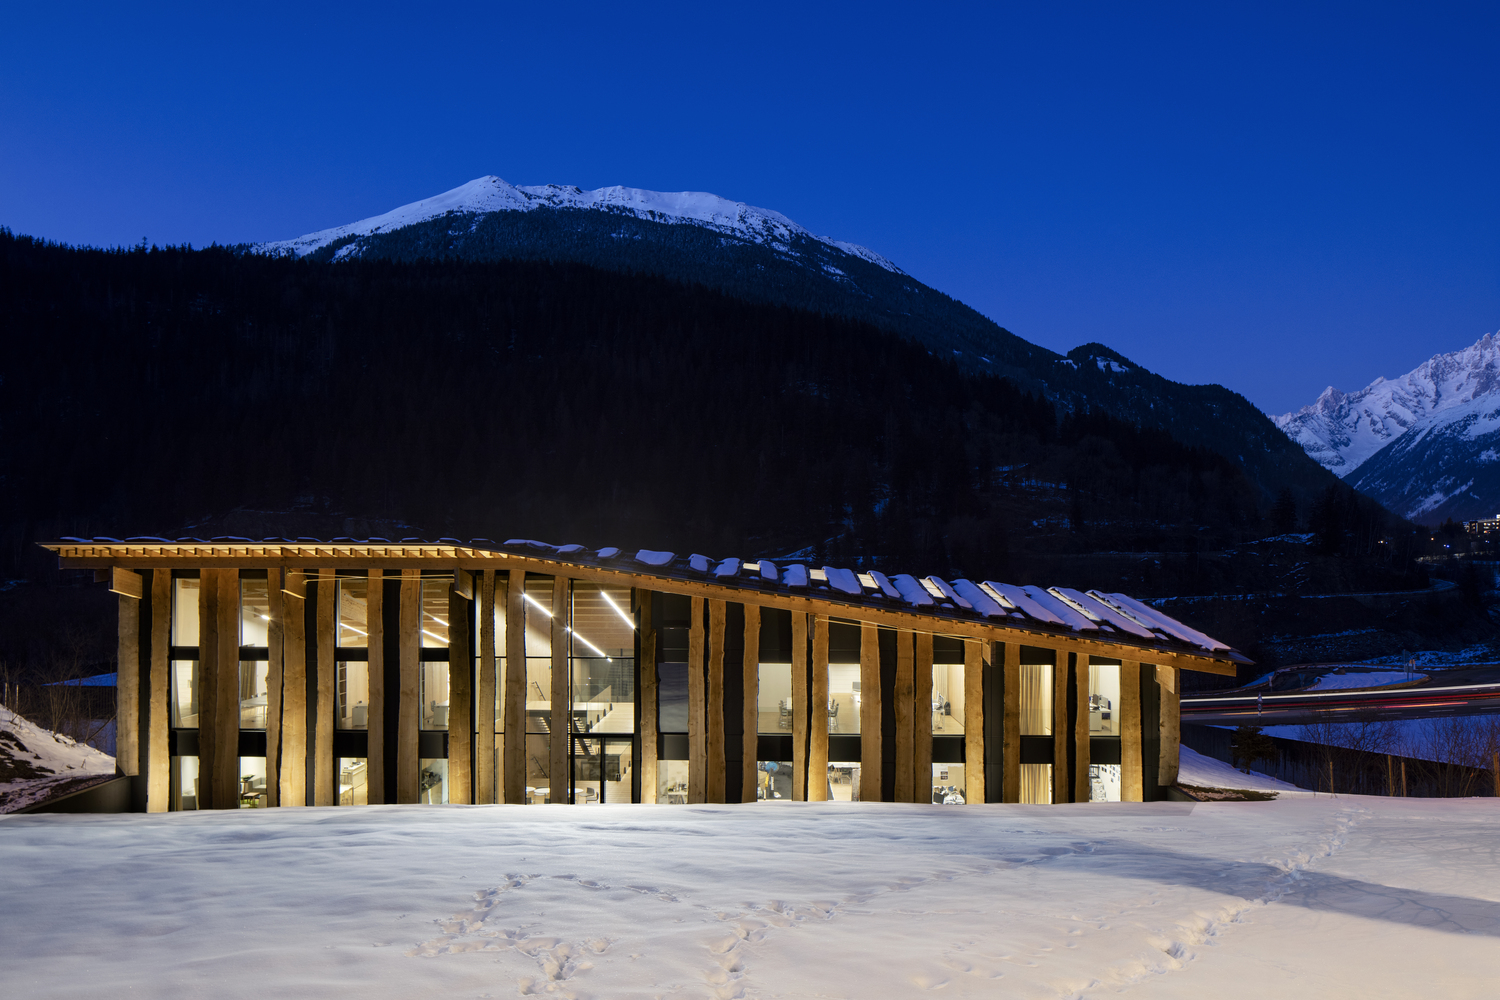 Mont-Blanc Base Camp by Kengo Kuma & Associates